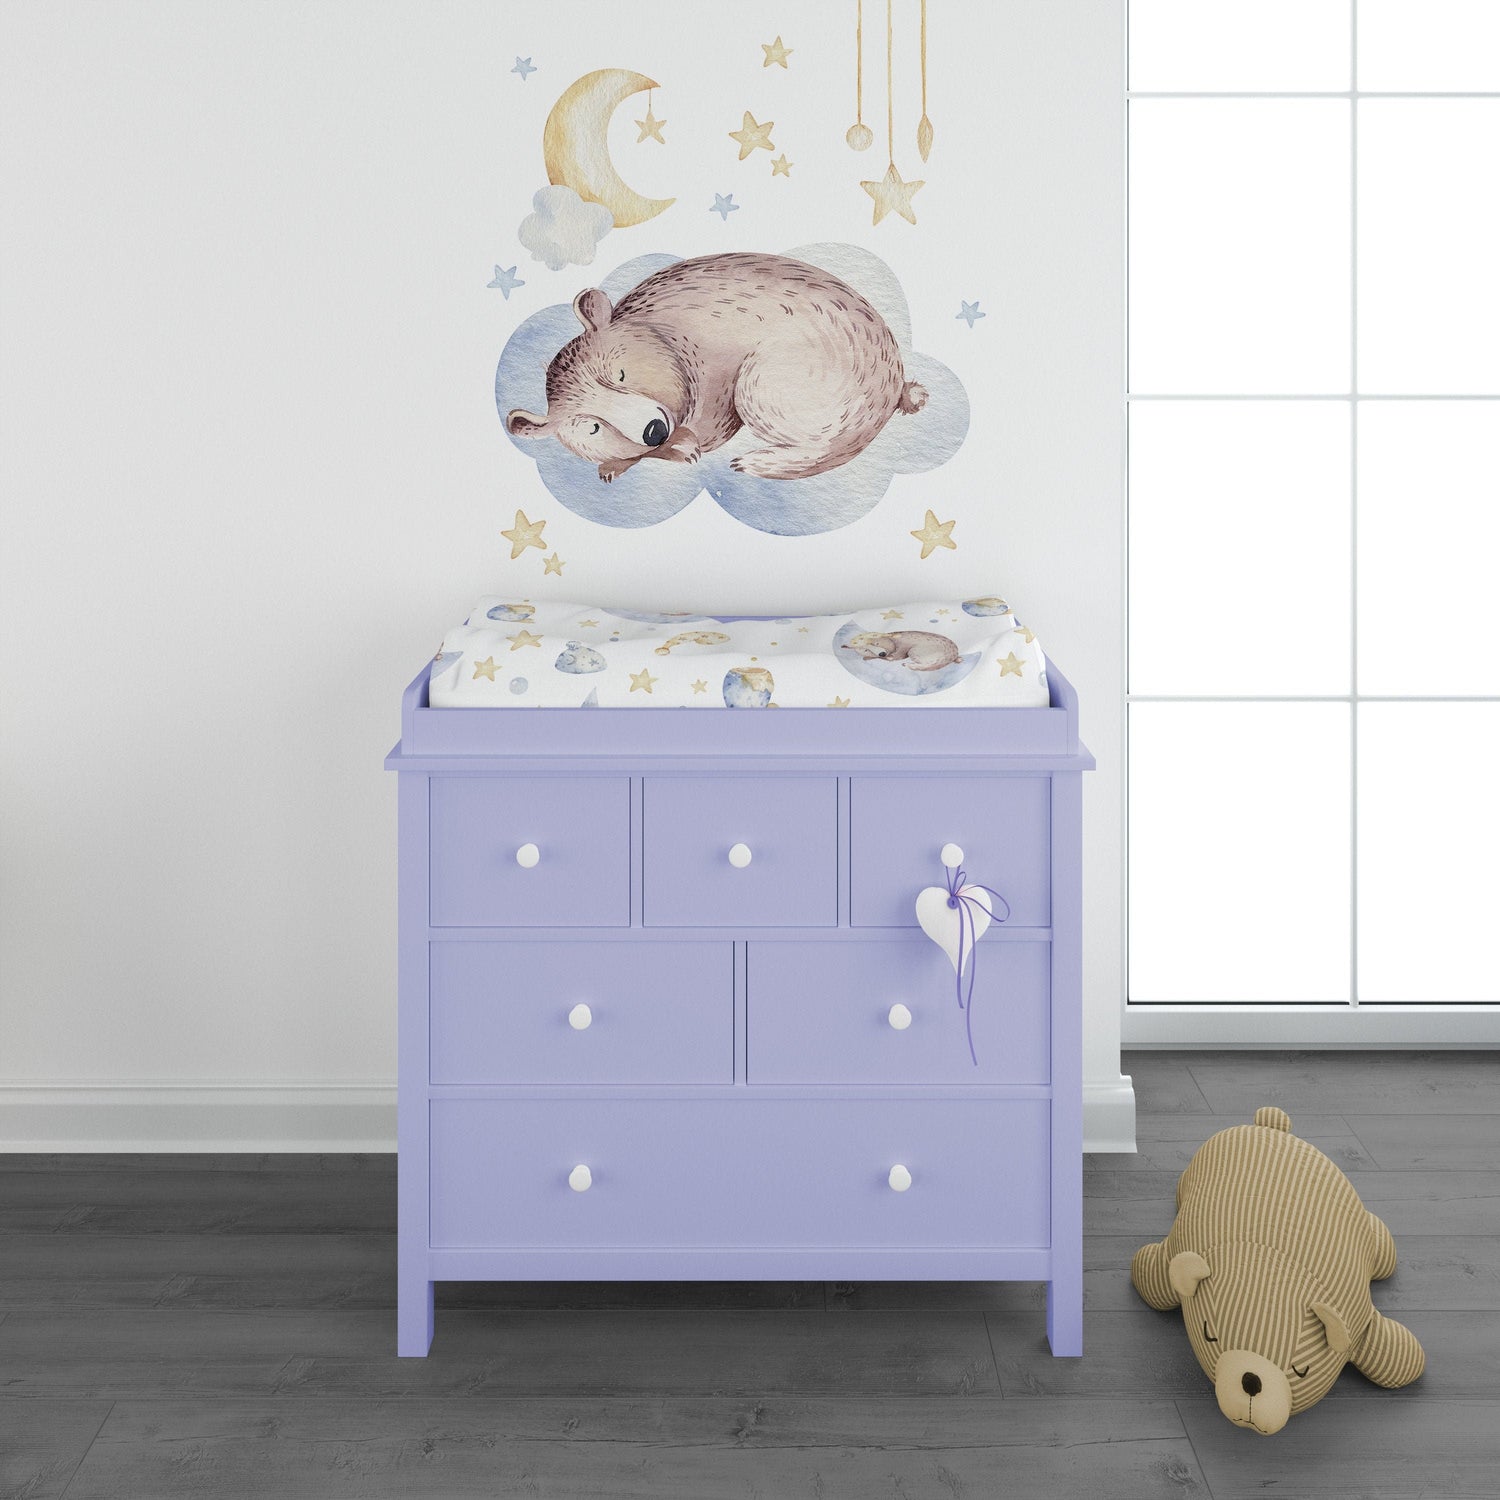 Baby Bear Nursery Wall Stickers